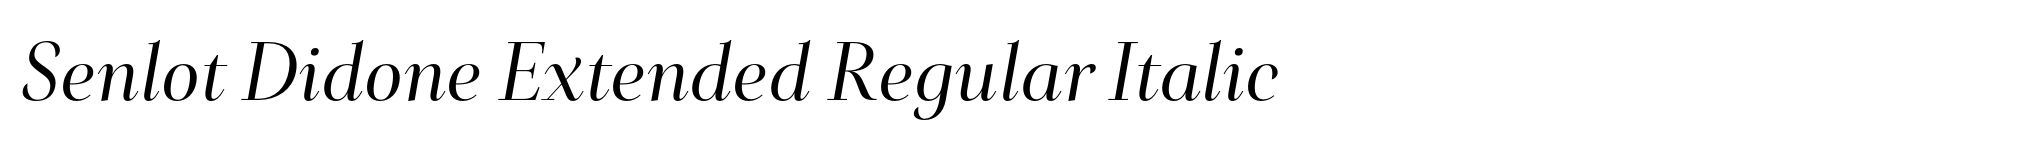 Senlot Didone Extended Regular Italic image